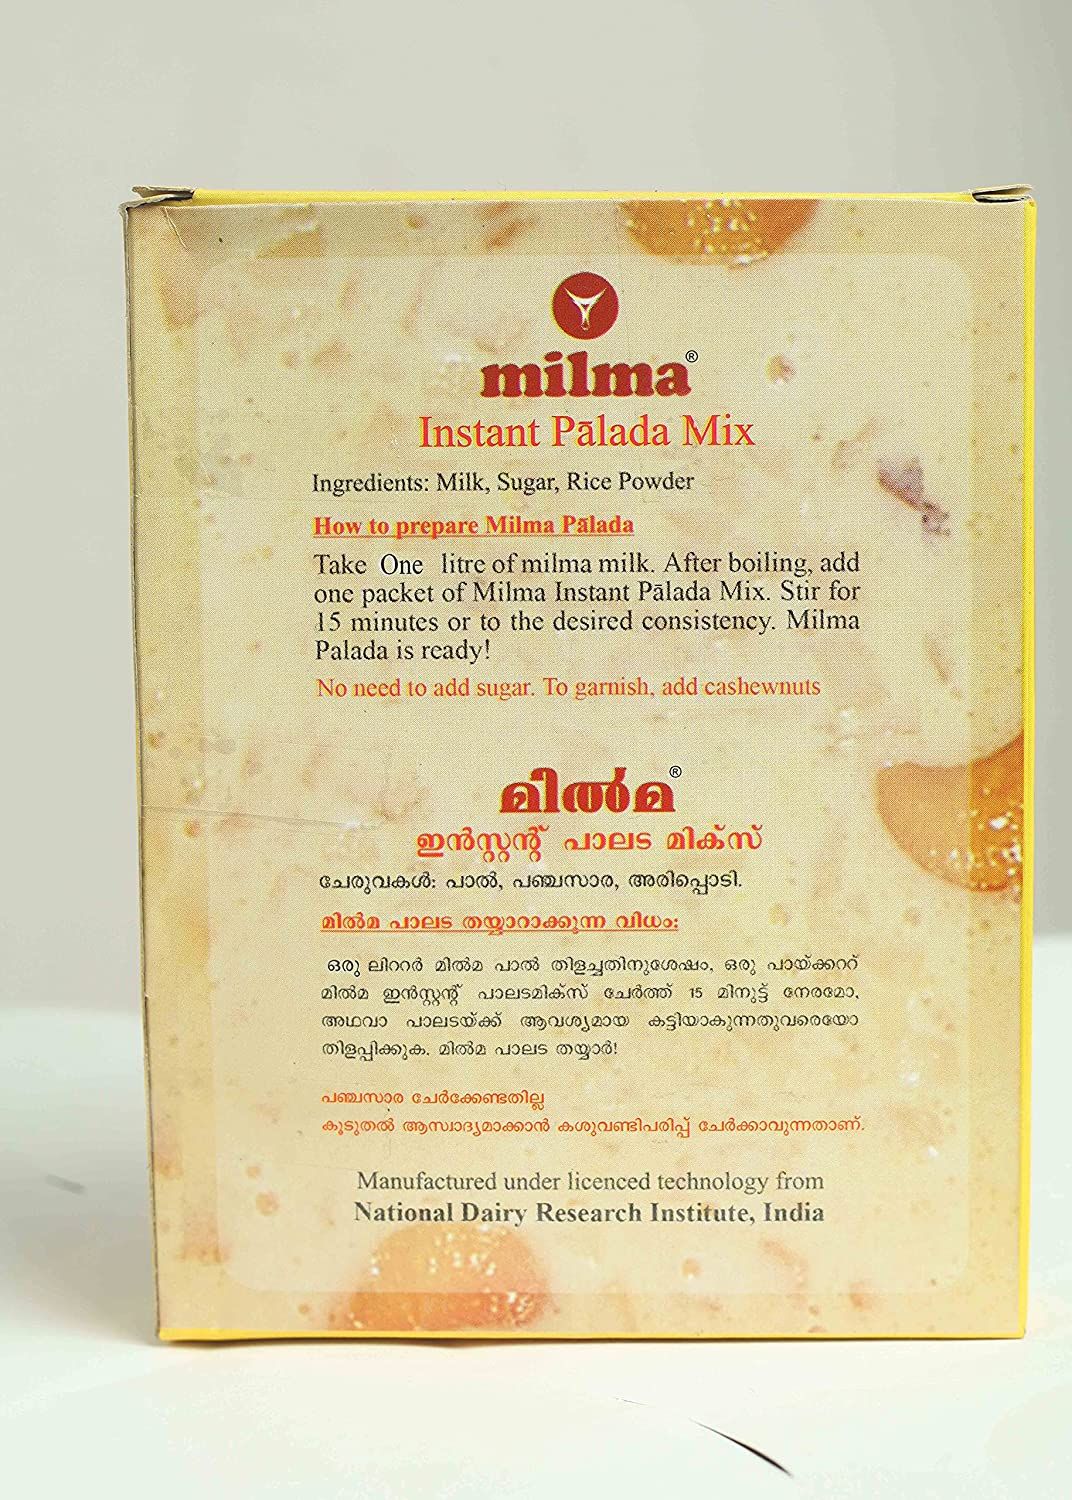 Milma Instant Palada Mix Image